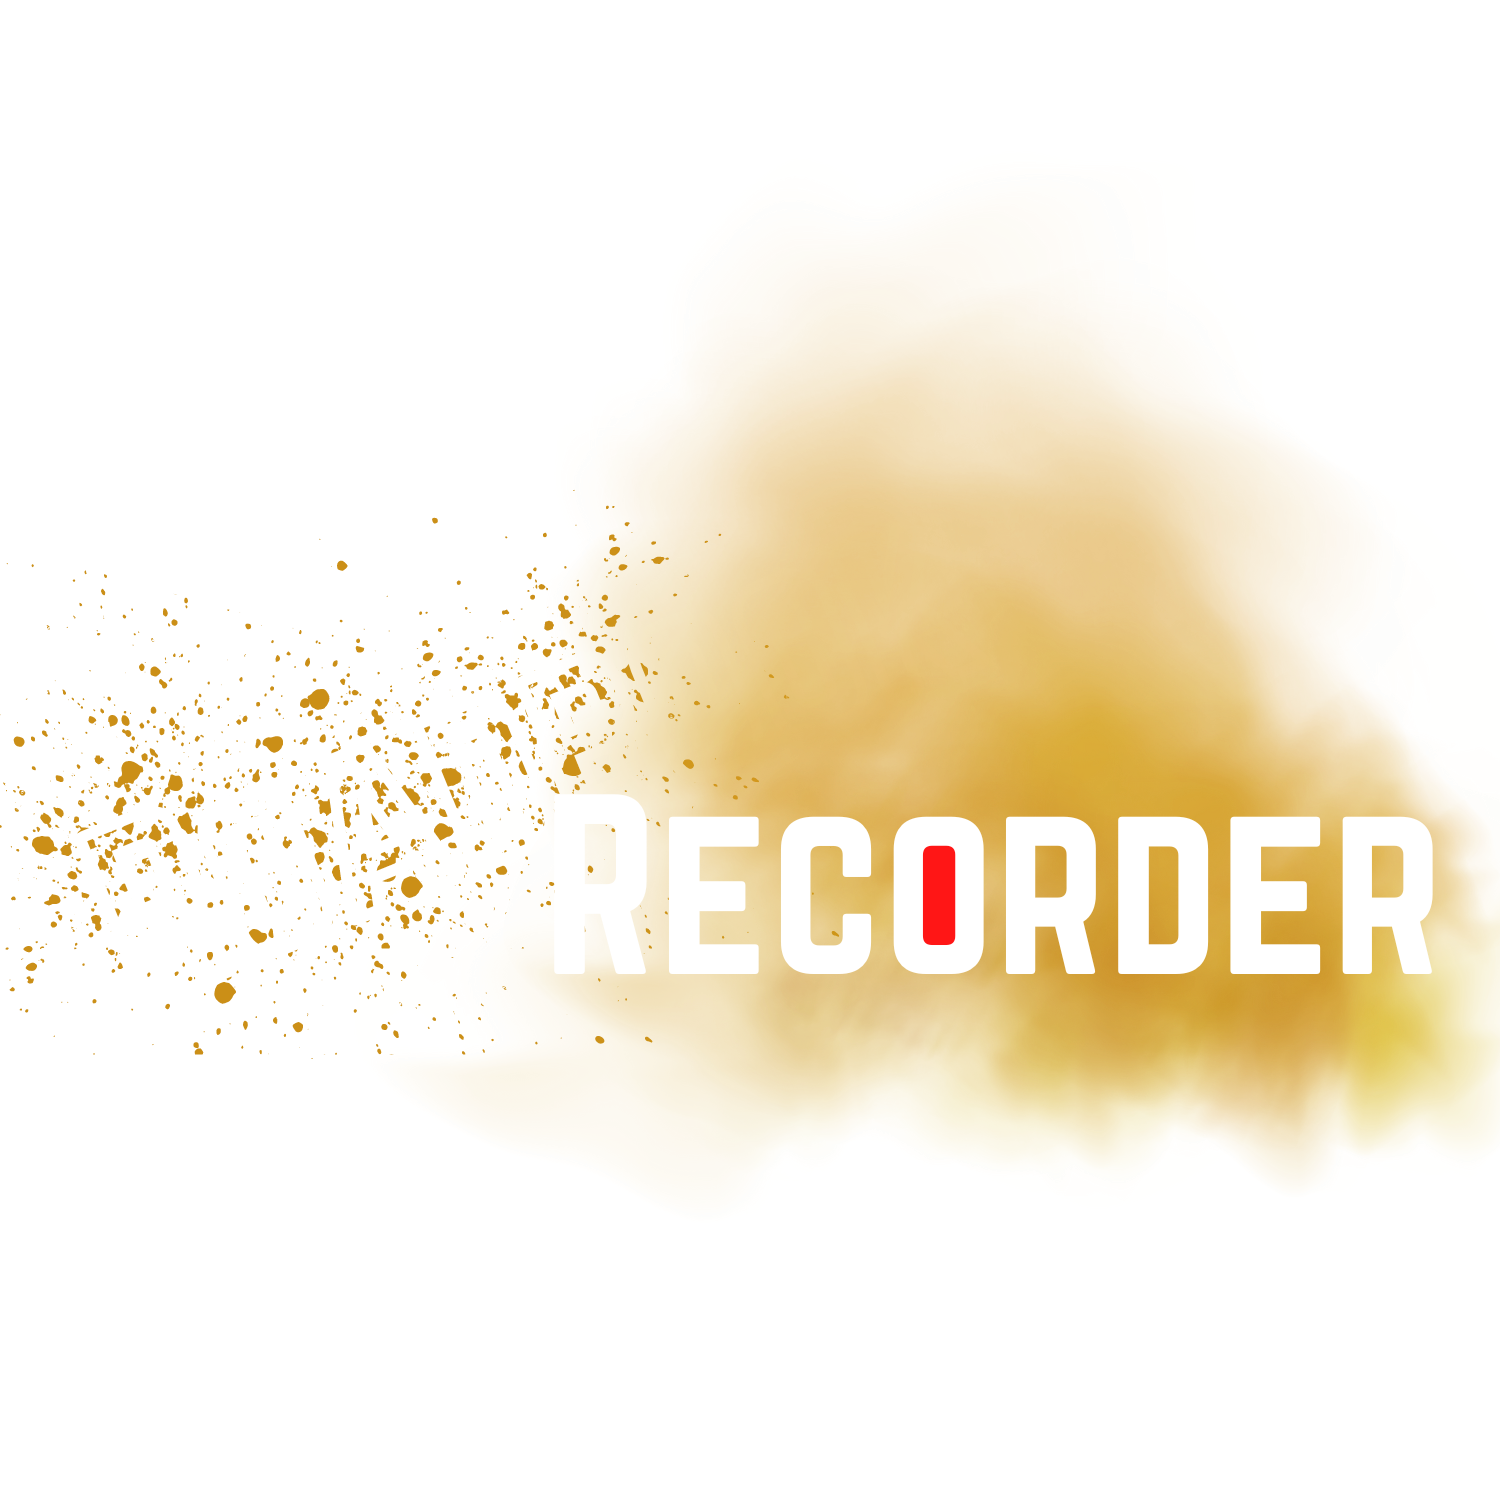 Roadbook Recorder